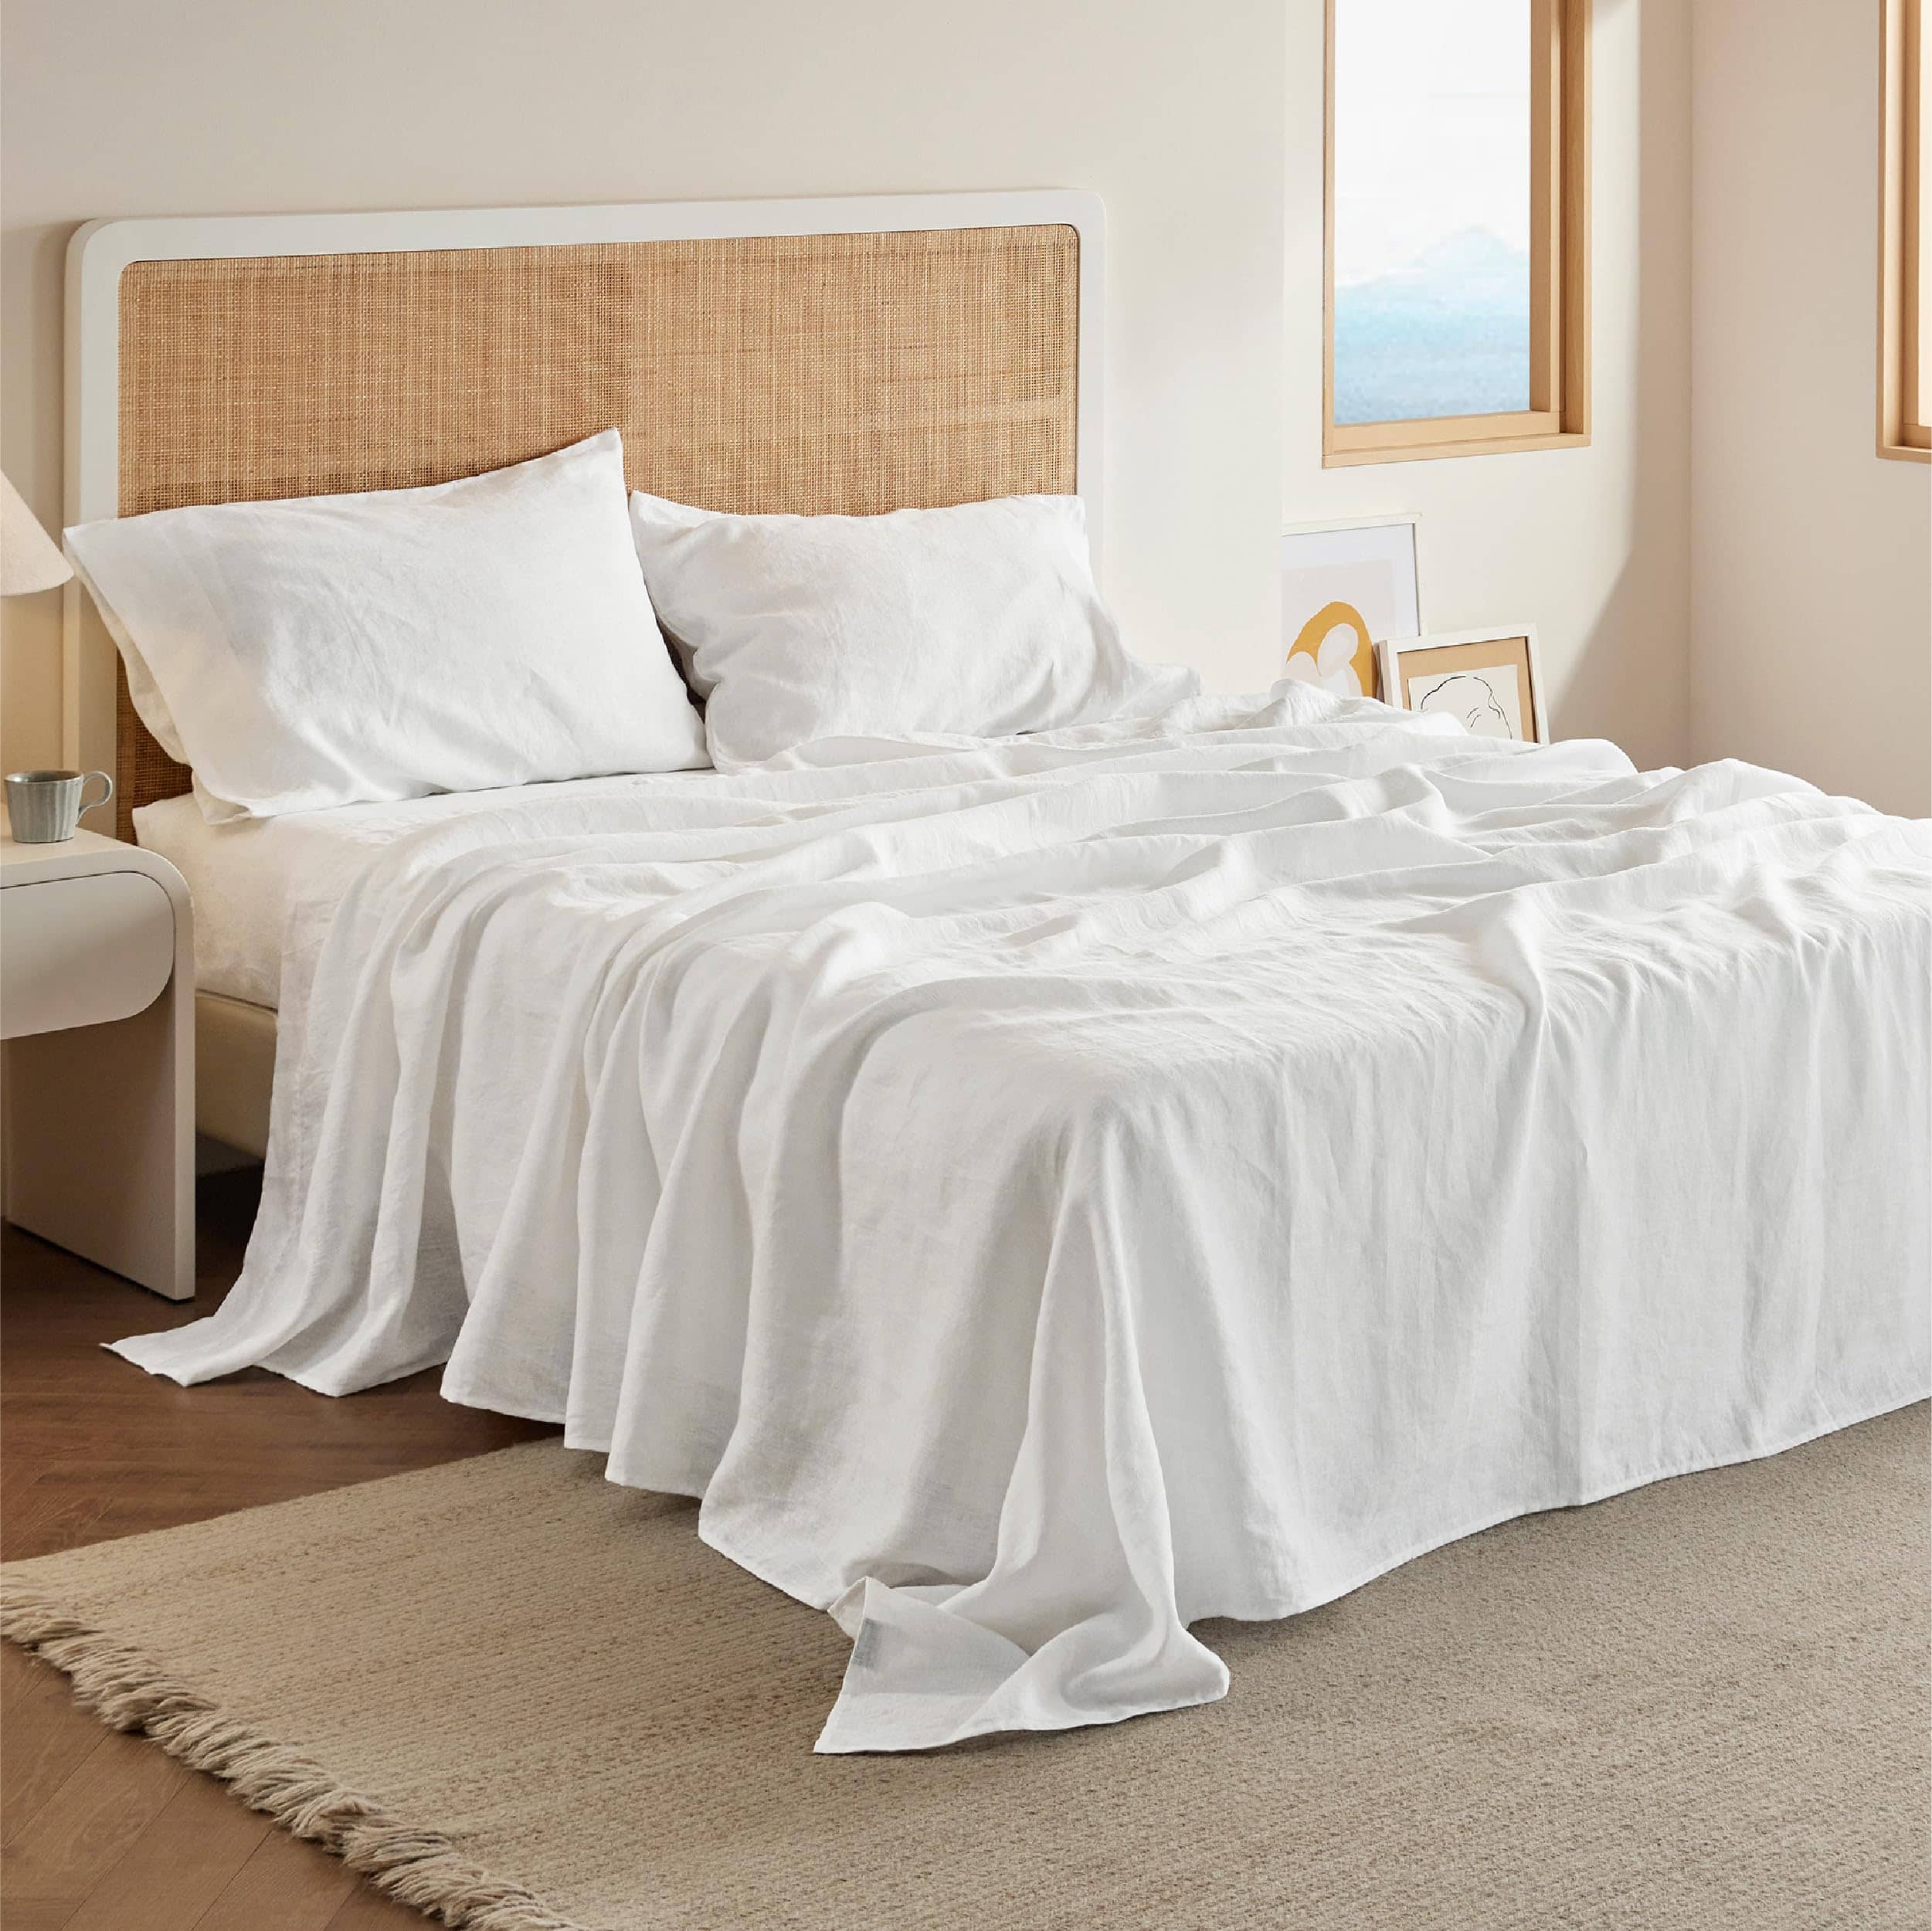 Bedsure Breathable Cotton Linen Bed Sheet Set